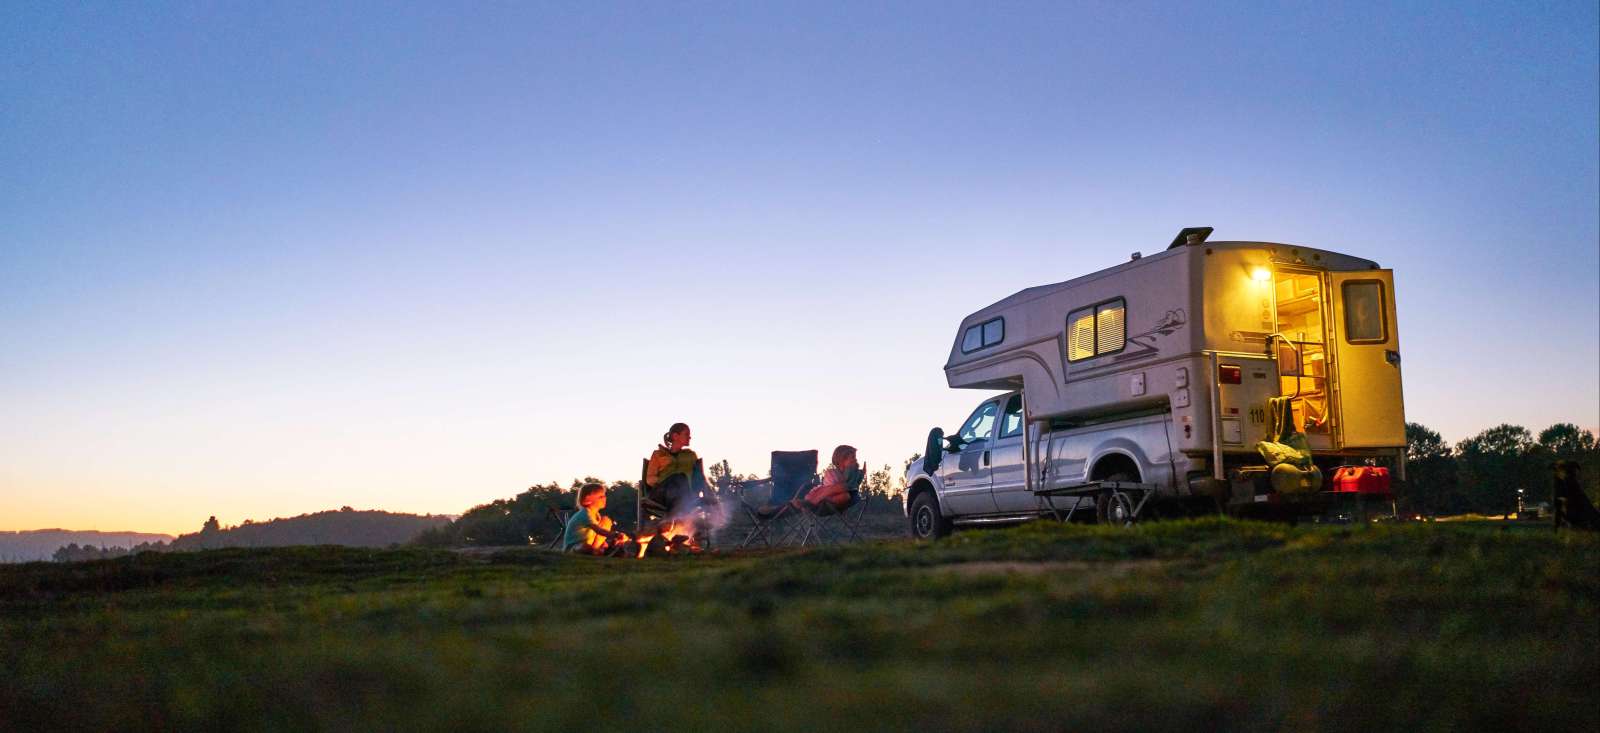 Voyage roadtrip - Ma famille en camping car chez les kiwis